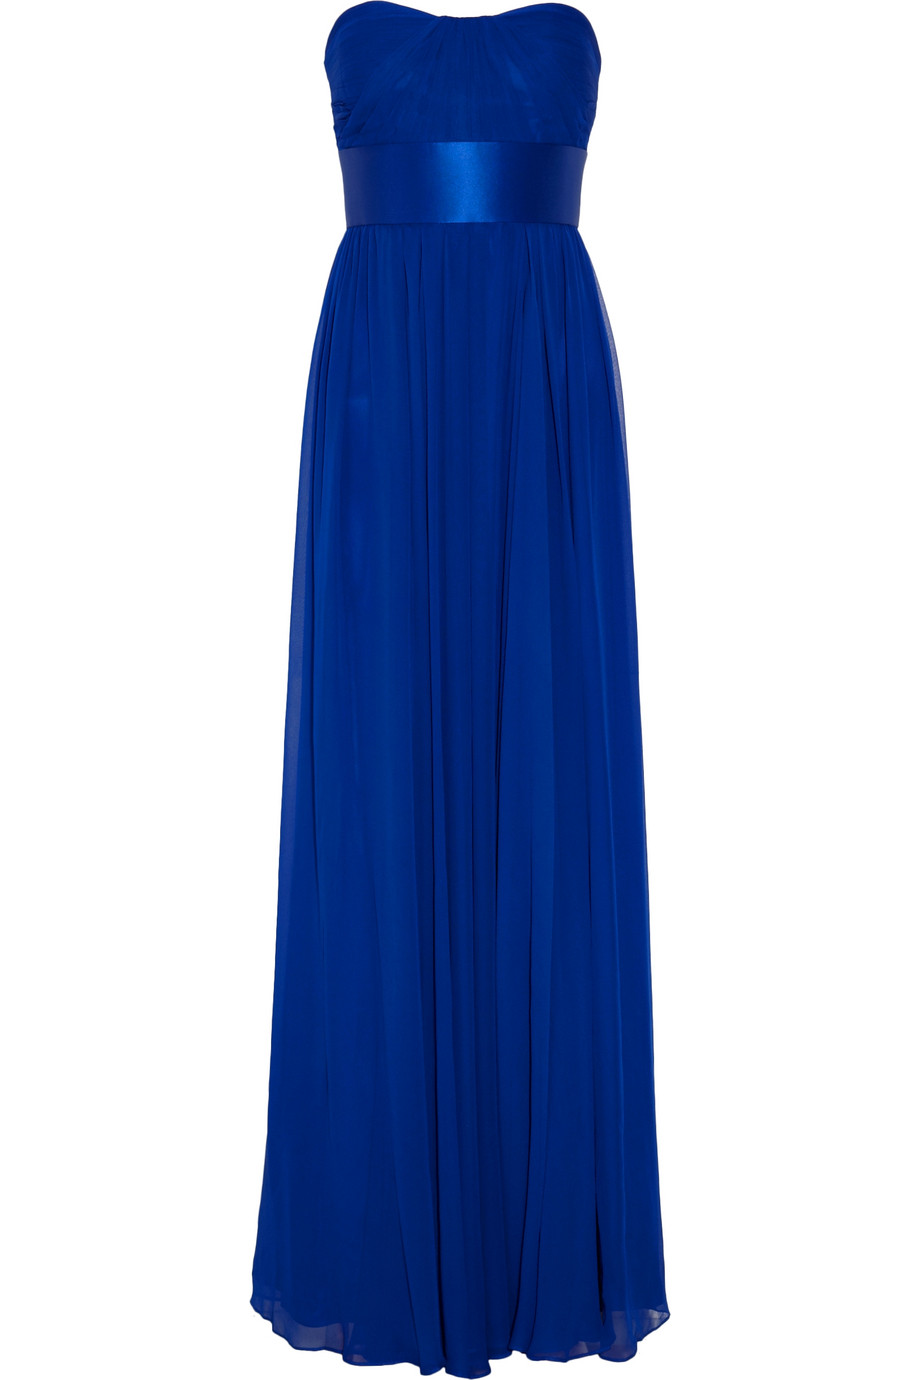 Notte By Marchesa Strapless Silk-chiffon Gown in Blue | Lyst